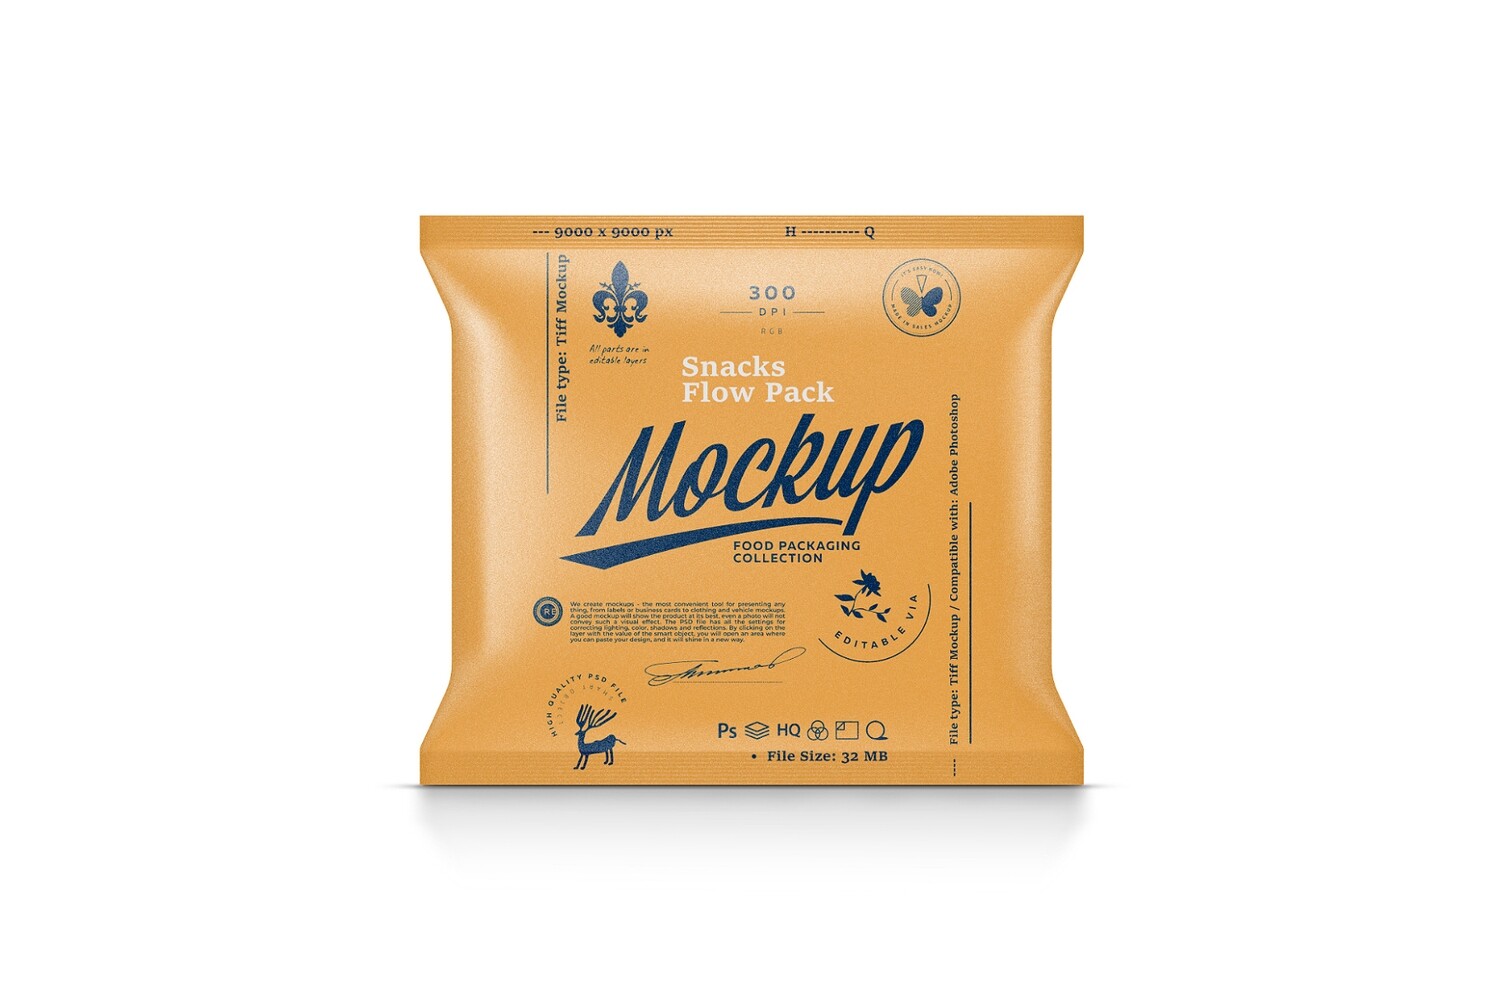 Snacks Flow Pack Mockup